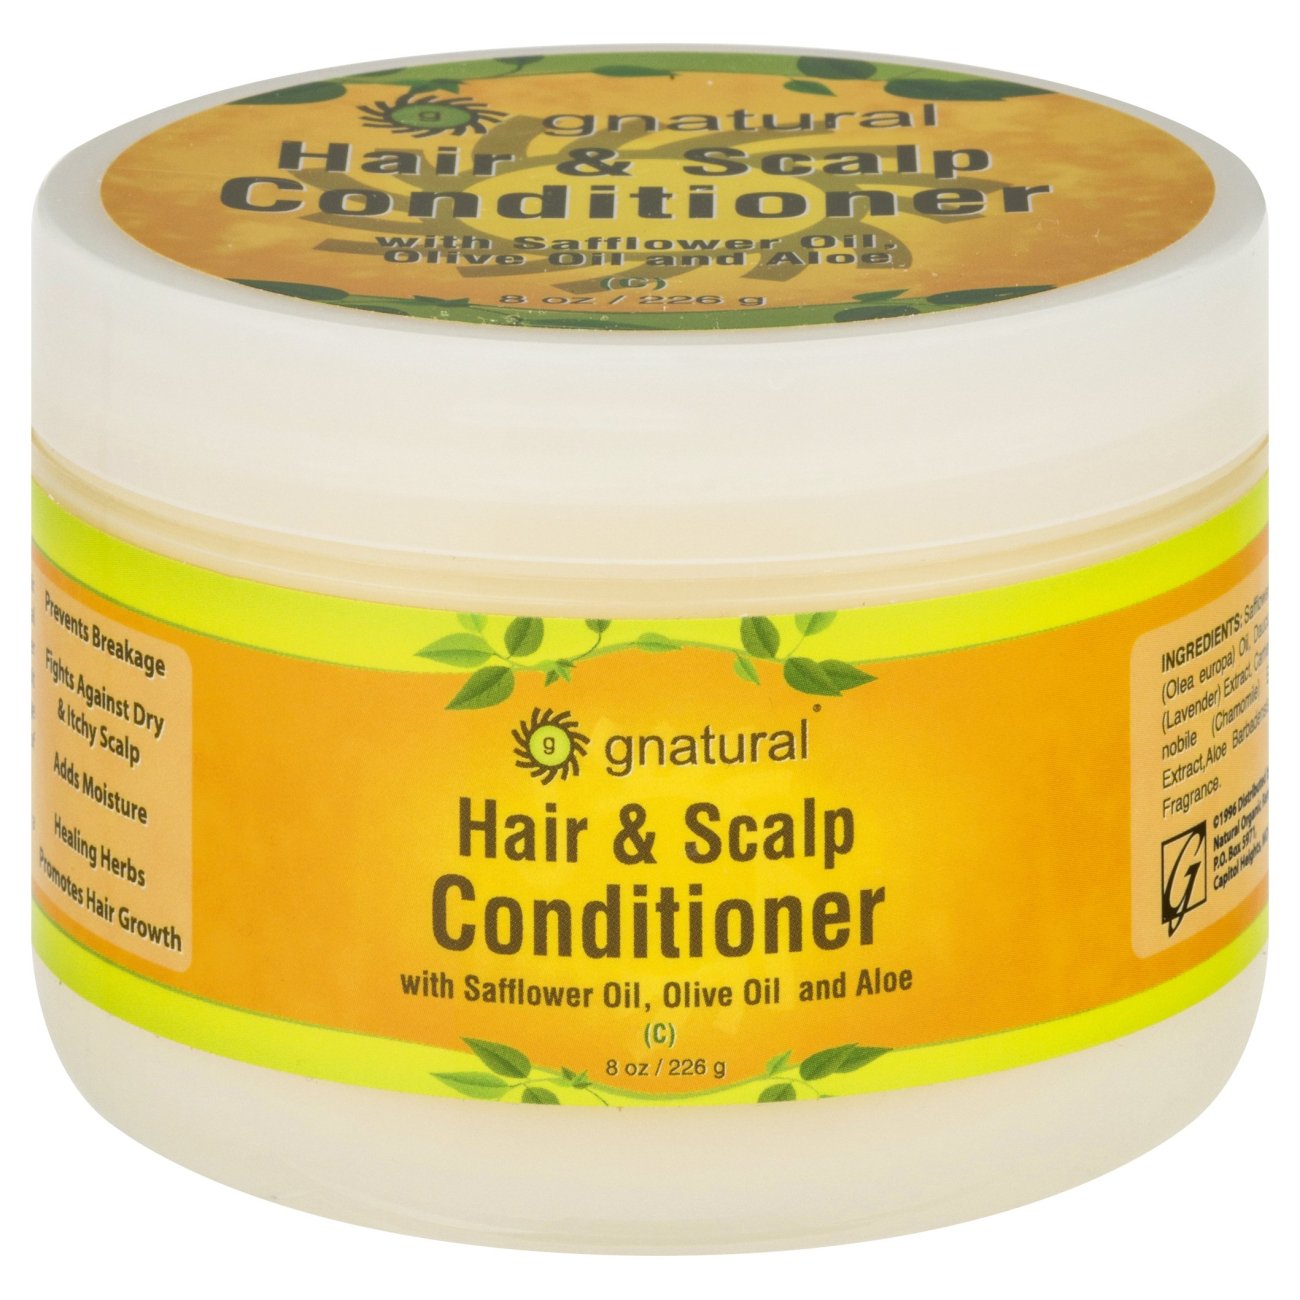 G Natural Hair & Scalp Conditioner - Shop Hair Care at H-E-B